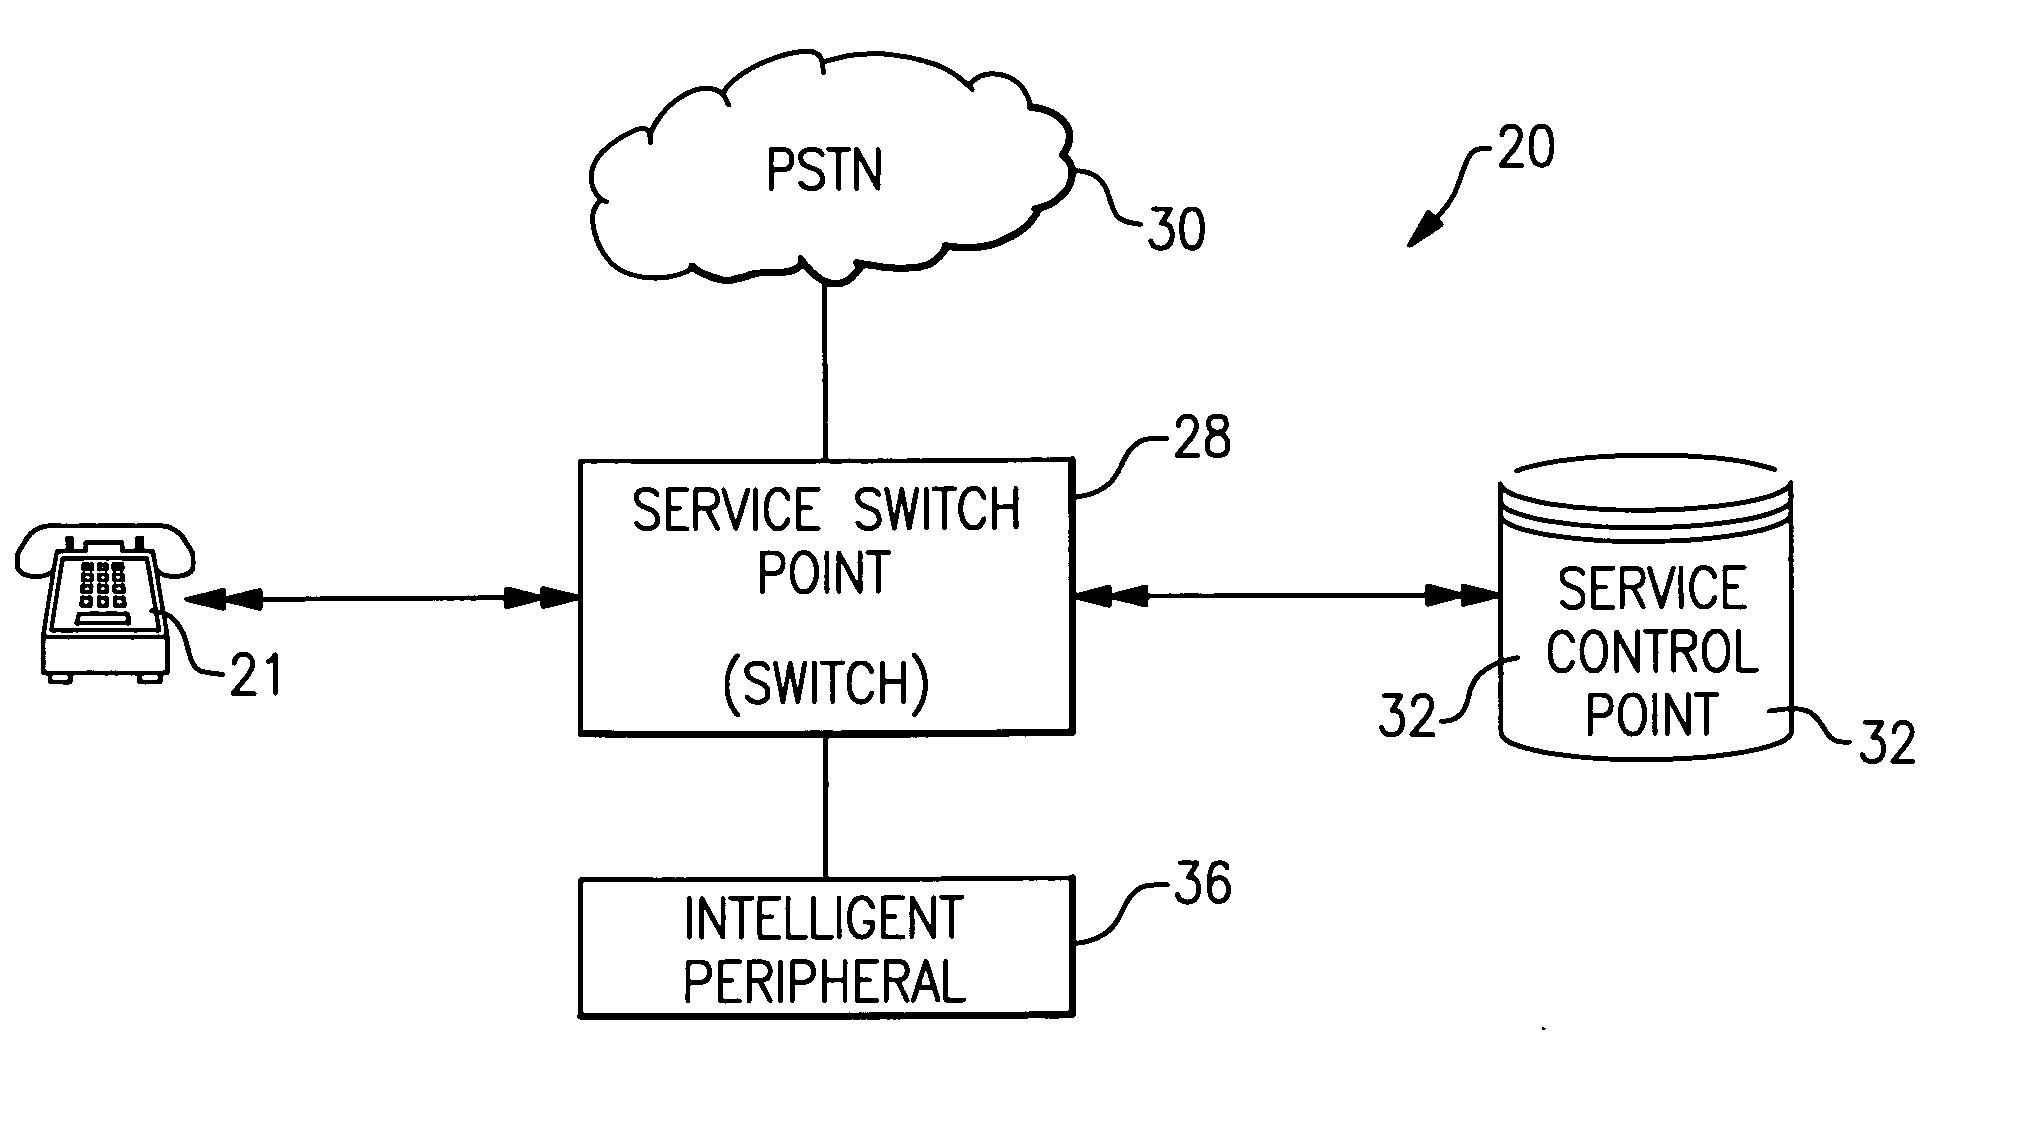 Automated intelligent network service configuration